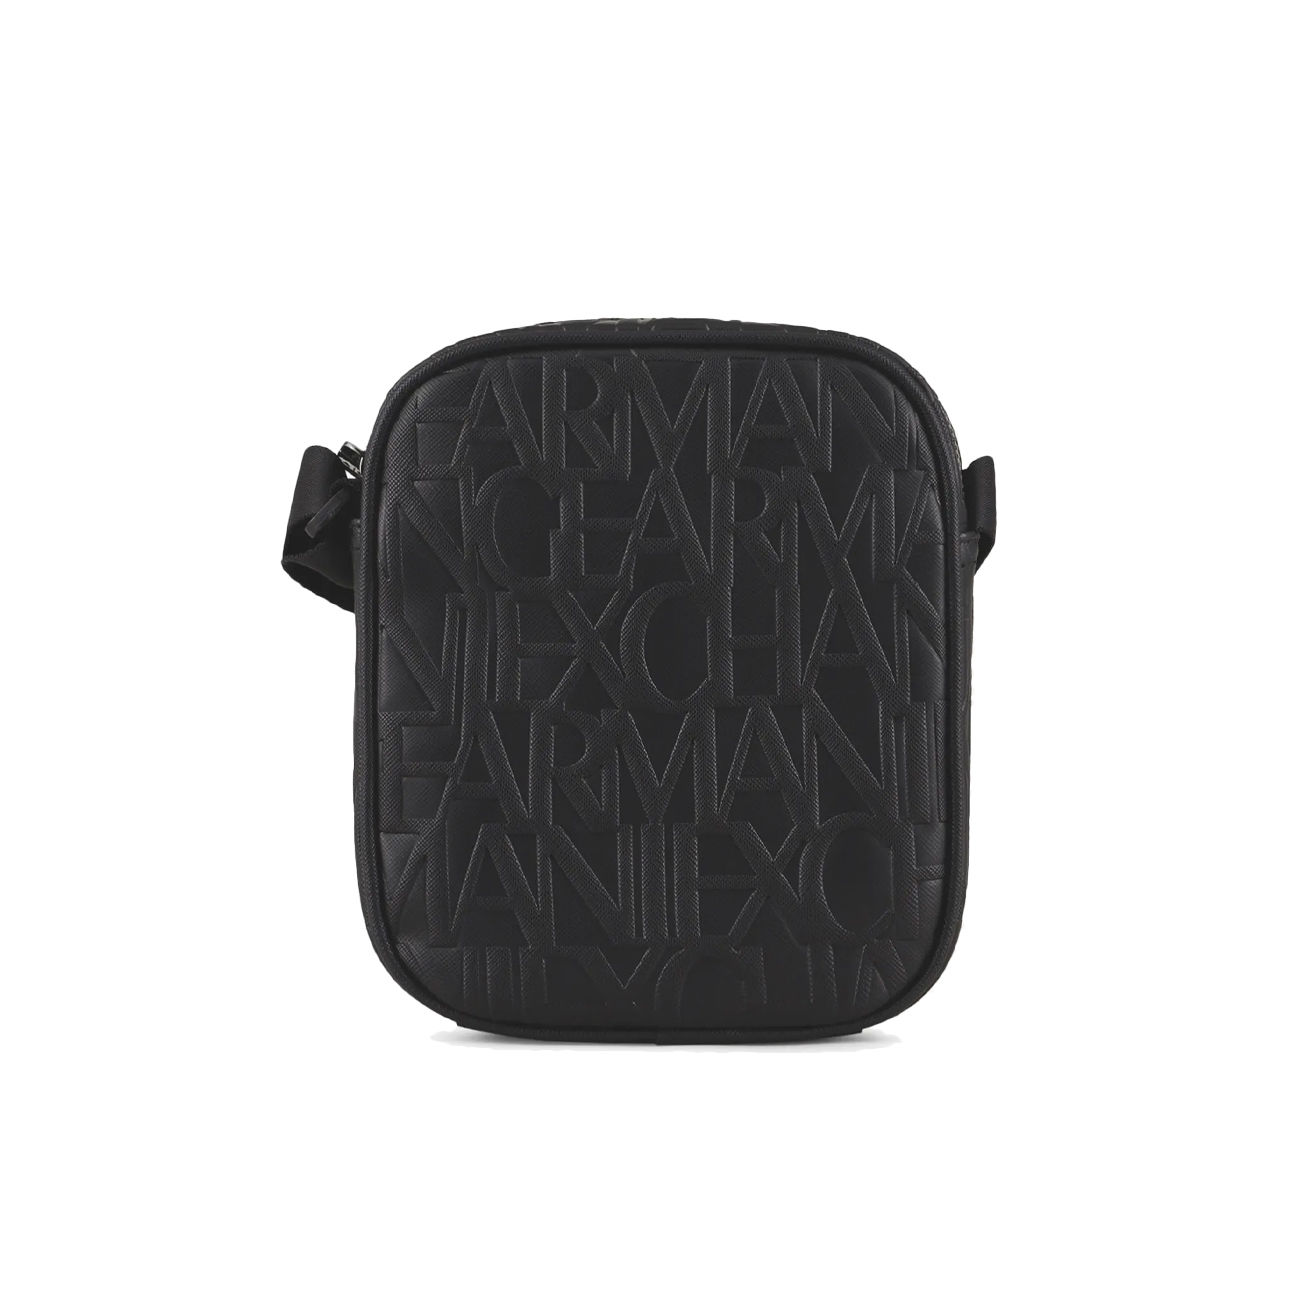 EMPORIO ARMANI: shoulder bag for man - Black | Emporio Armani shoulder bag  Y4M185Y022V online at GIGLIO.COM